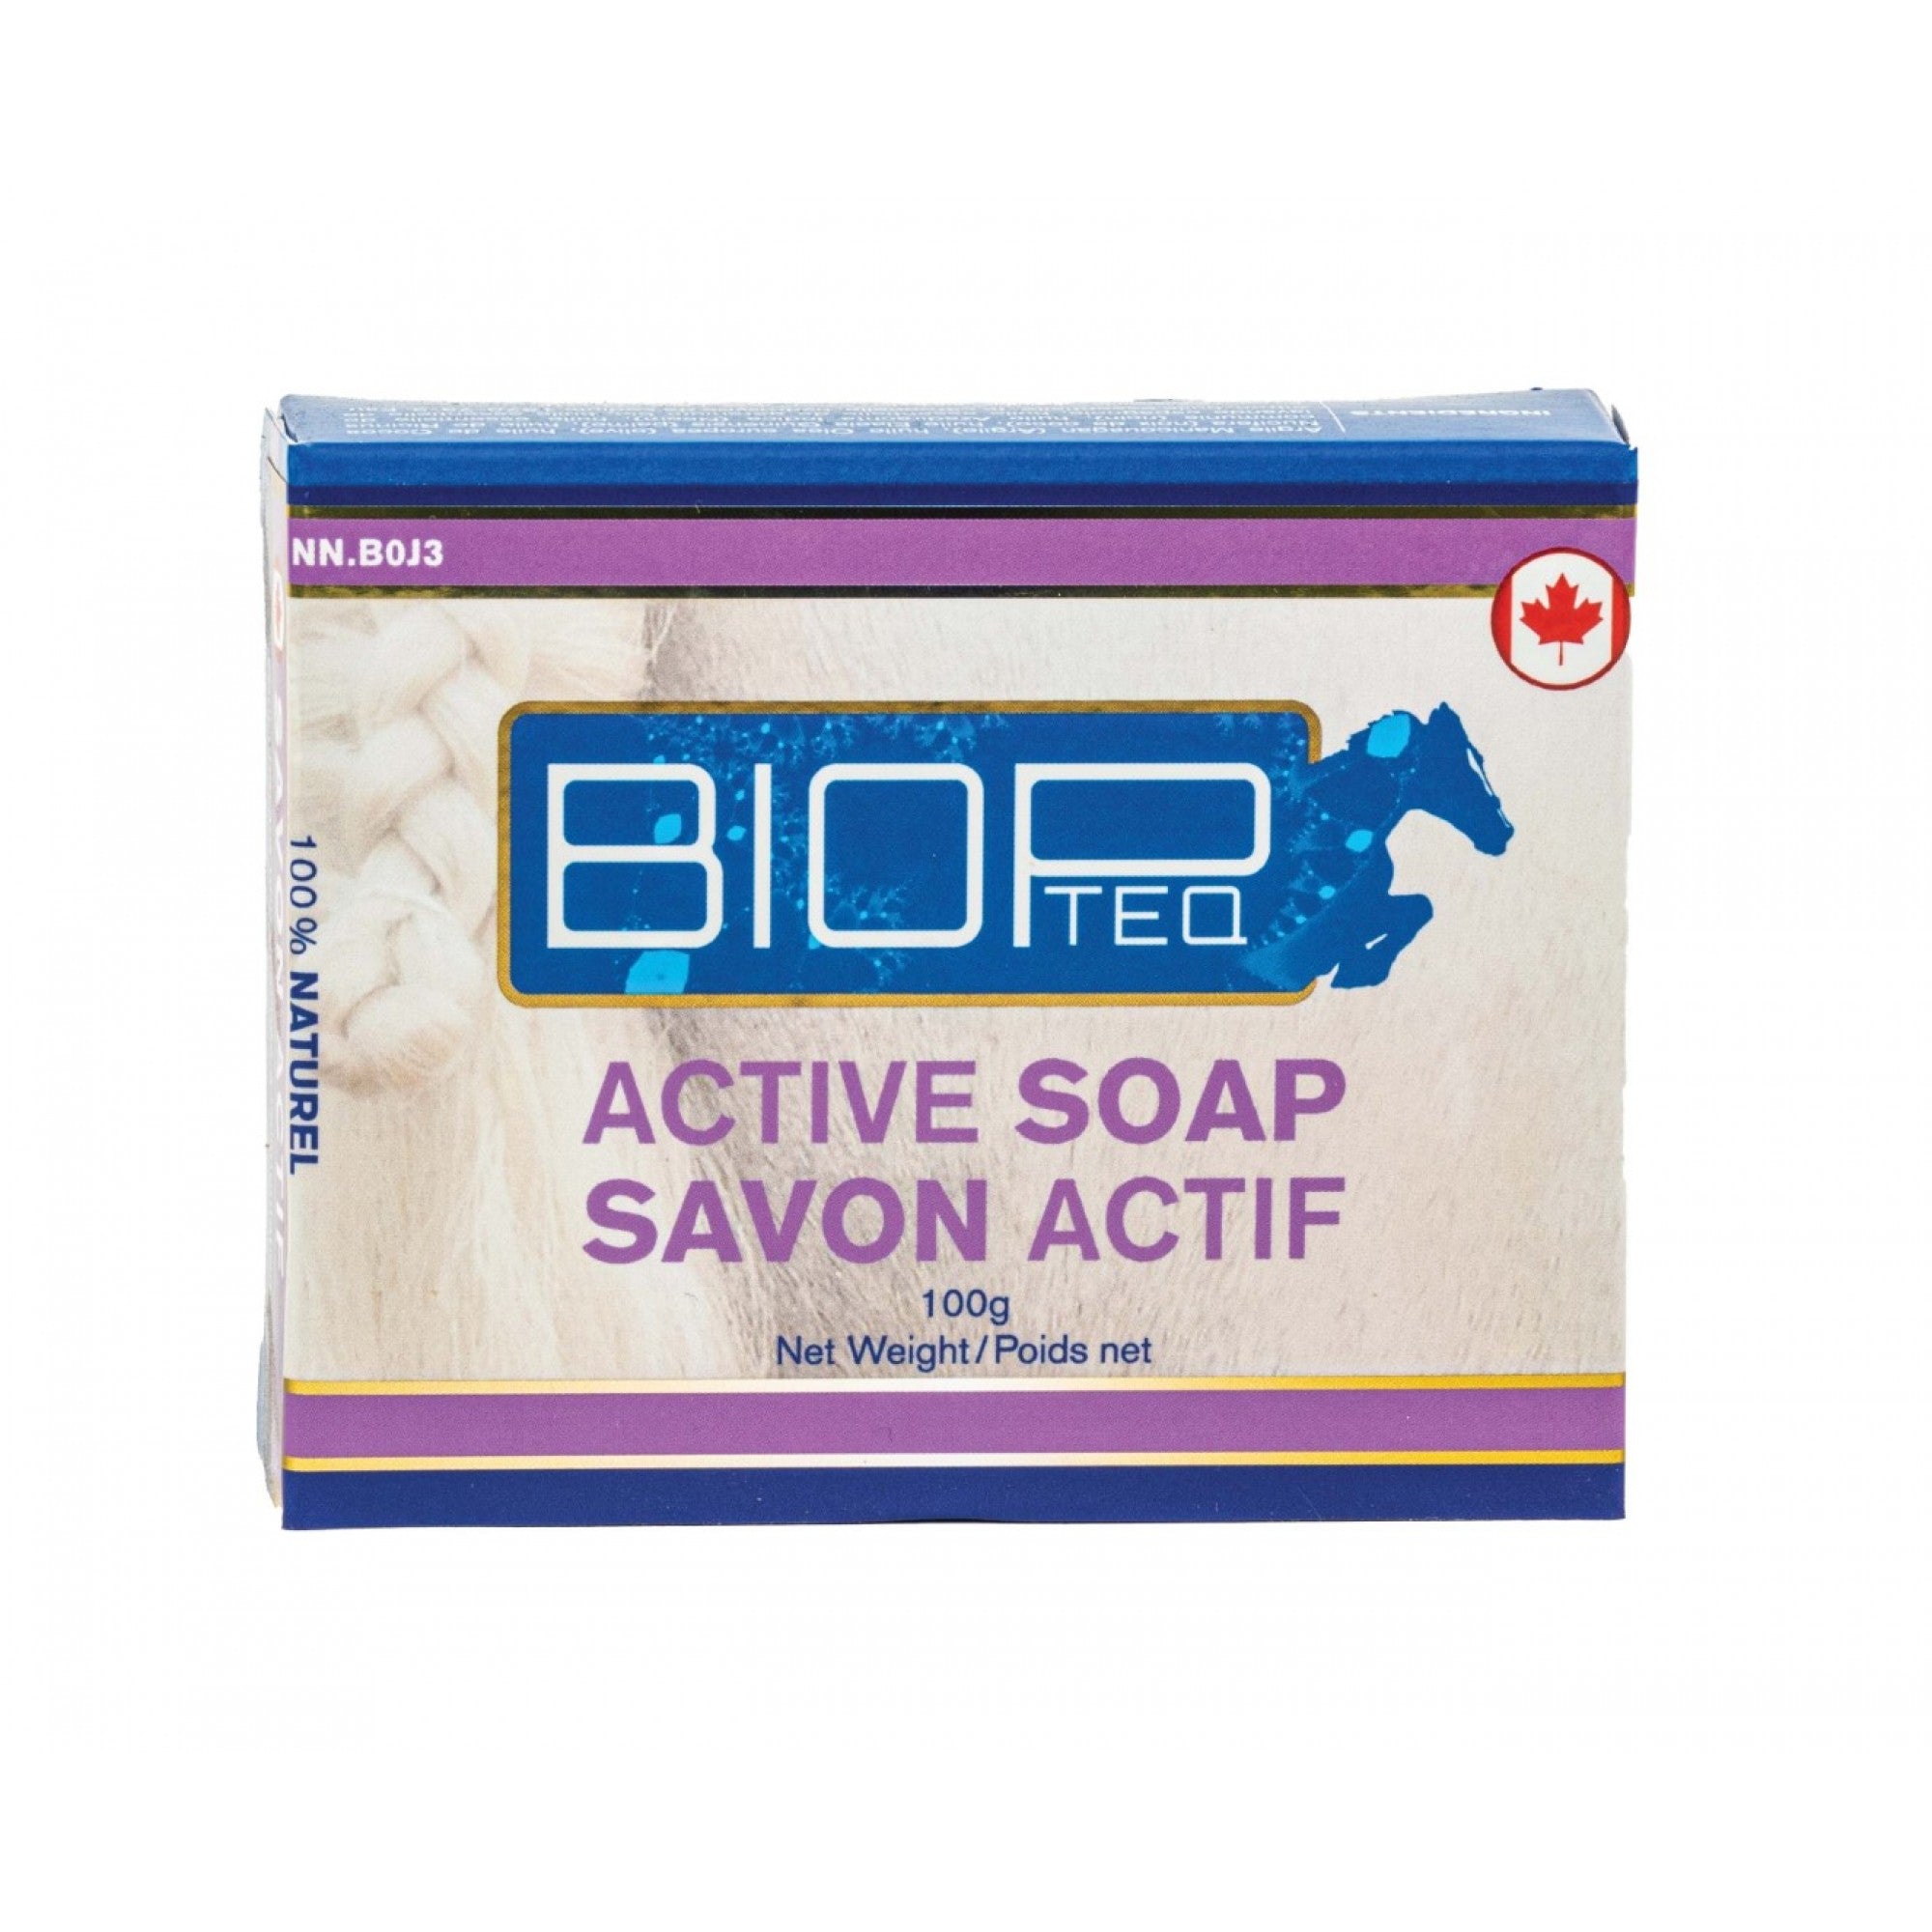 Biopteq - Active Soap 100g